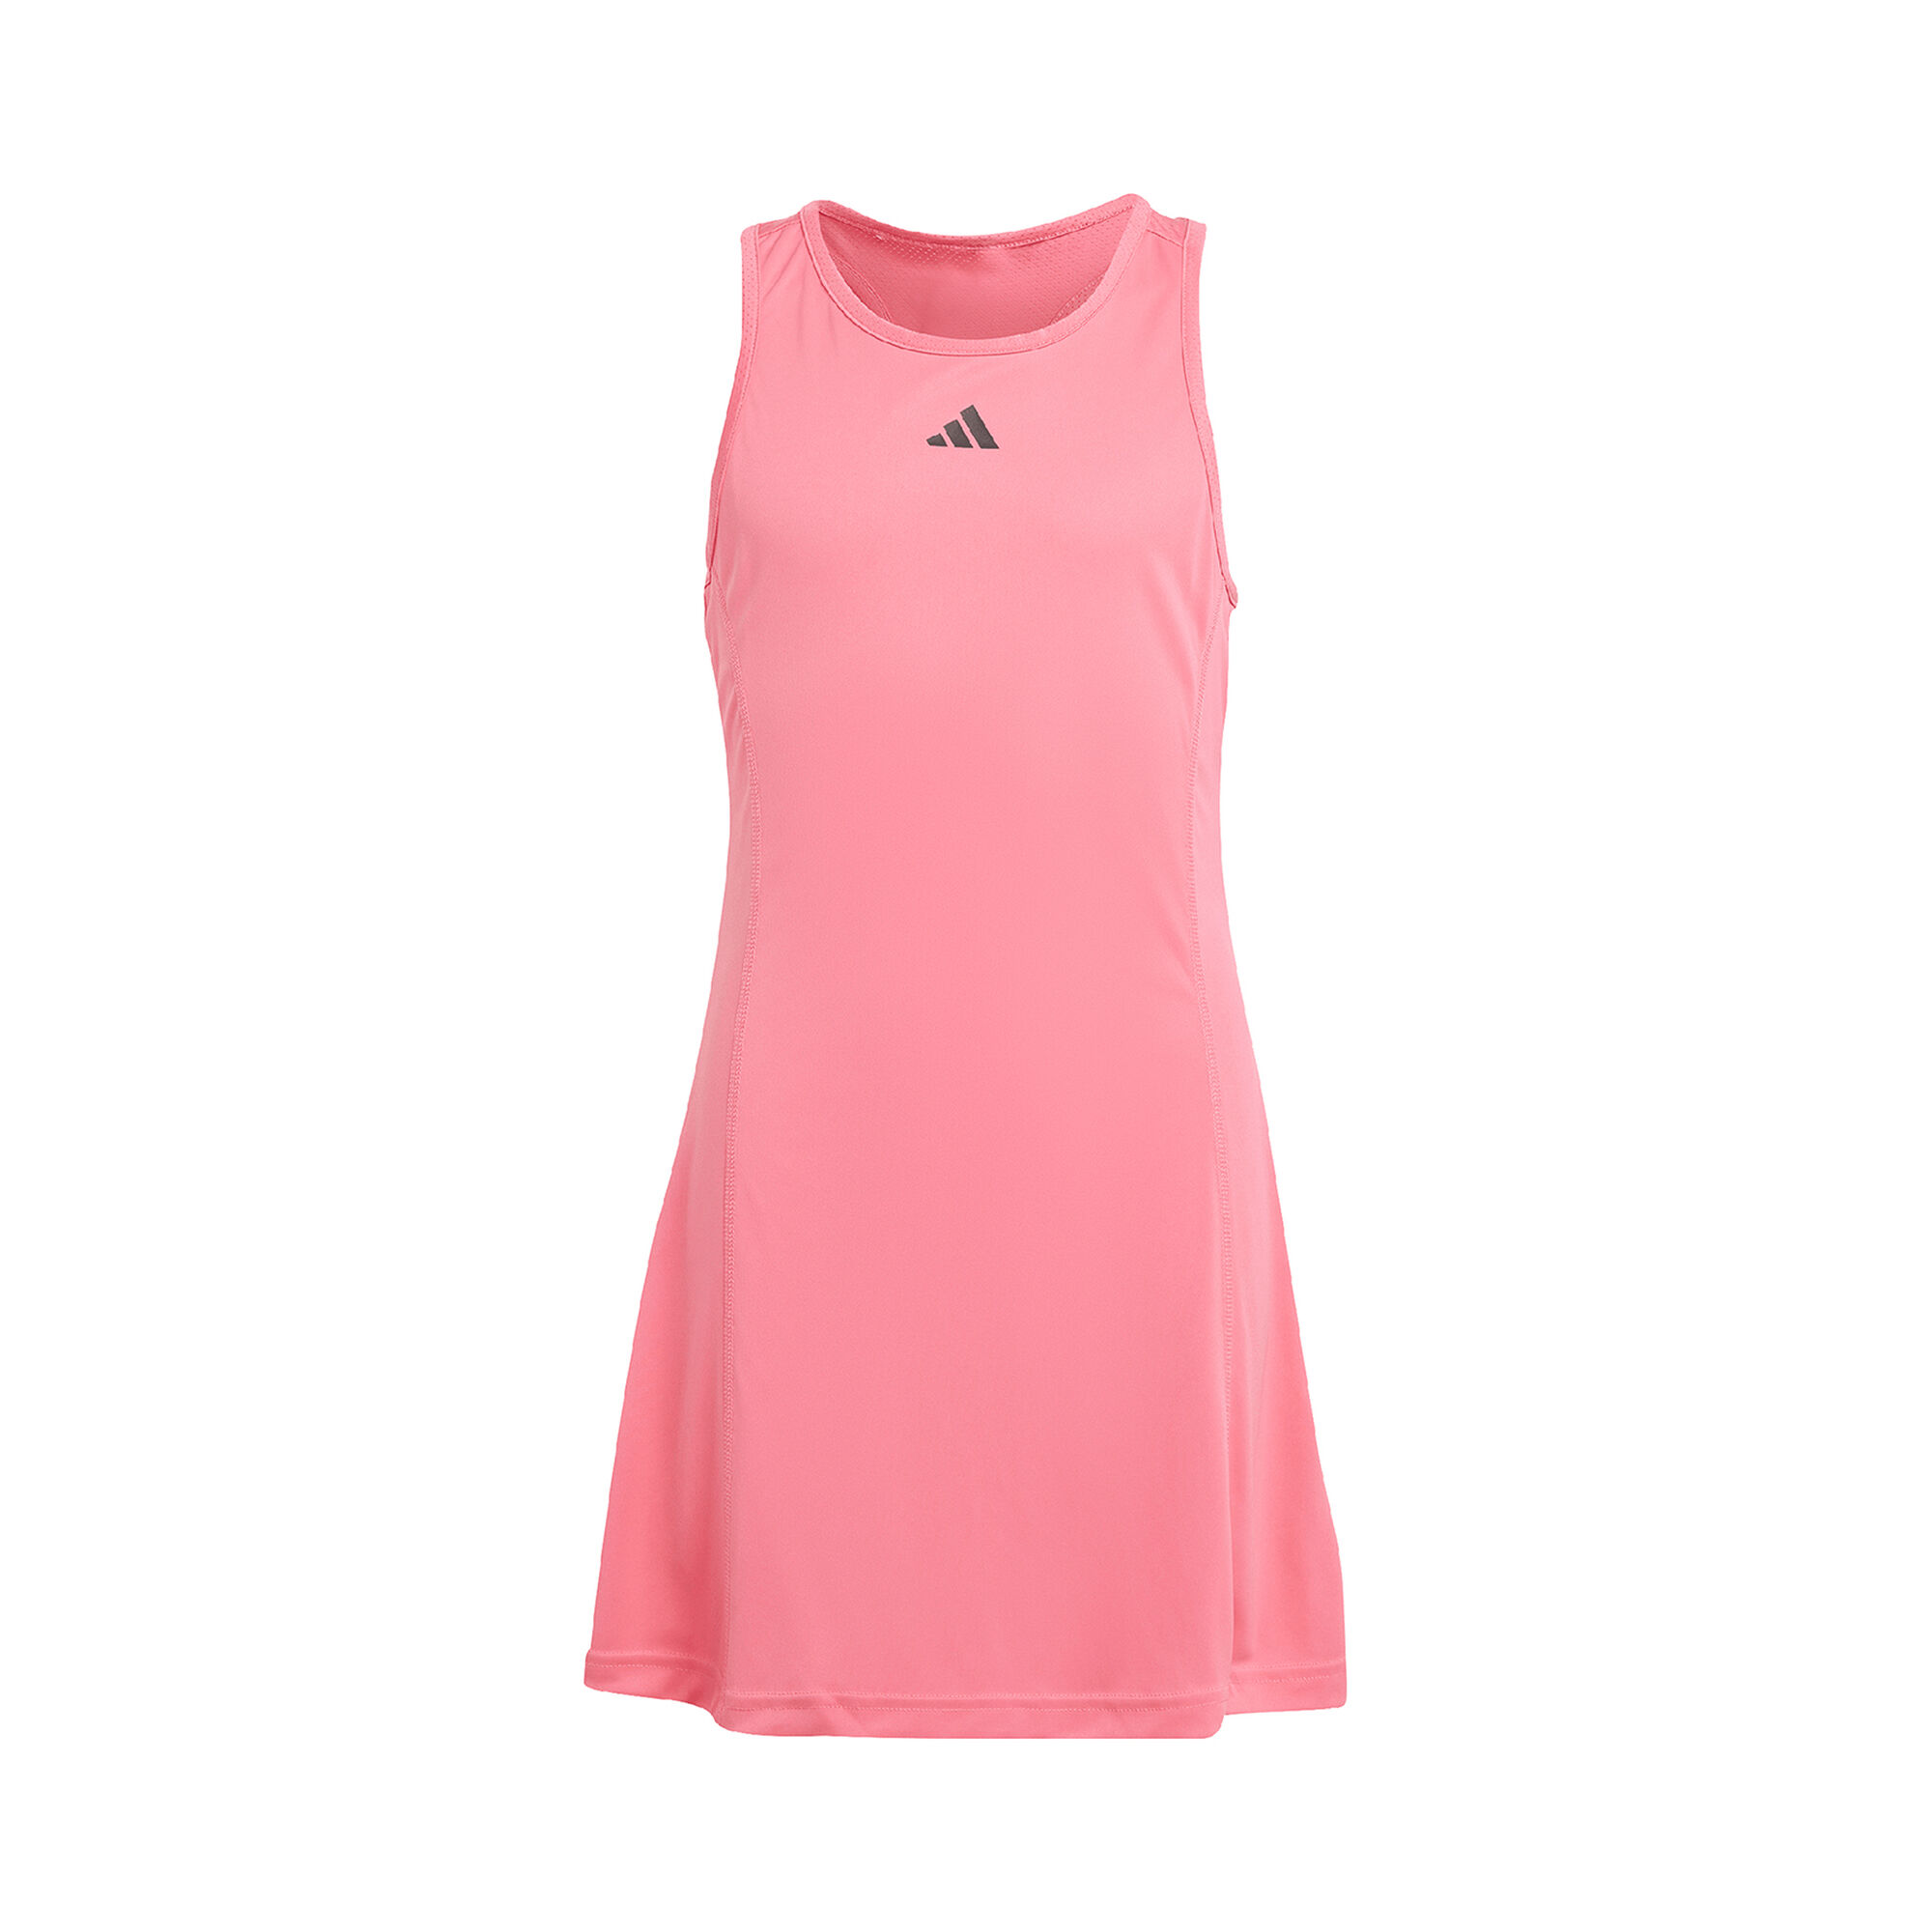 Club Kjole Pige - Pink køb online | Tennis-Point